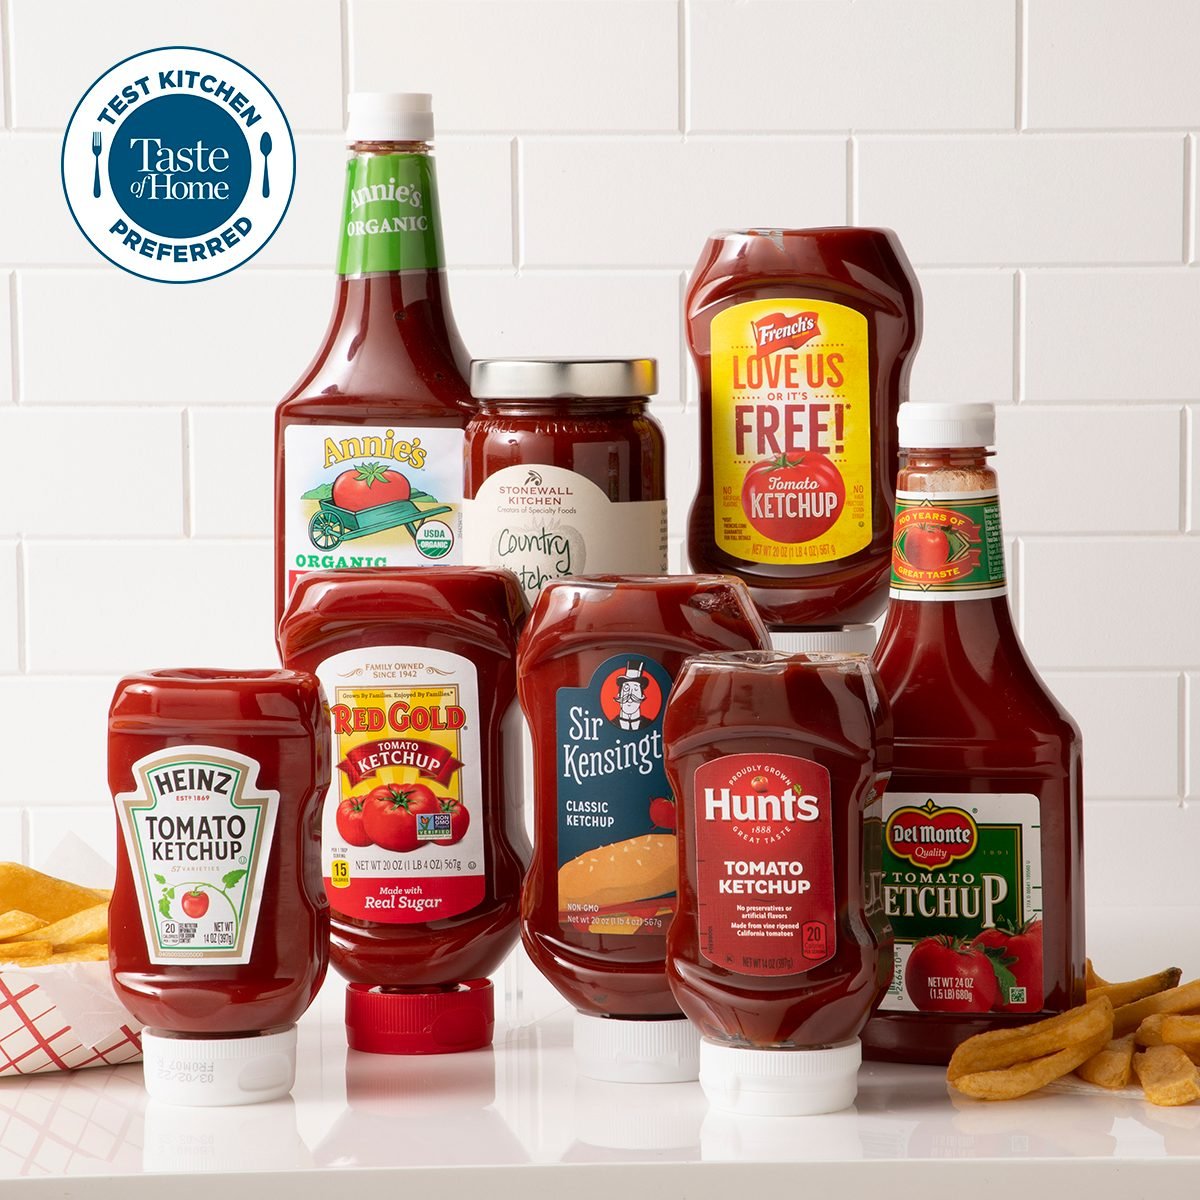 https://www.tasteofhome.com/wp-content/uploads/2021/03/tkp-test-kitchen-preferred-the-best-ketchup-1200x1200.jpg